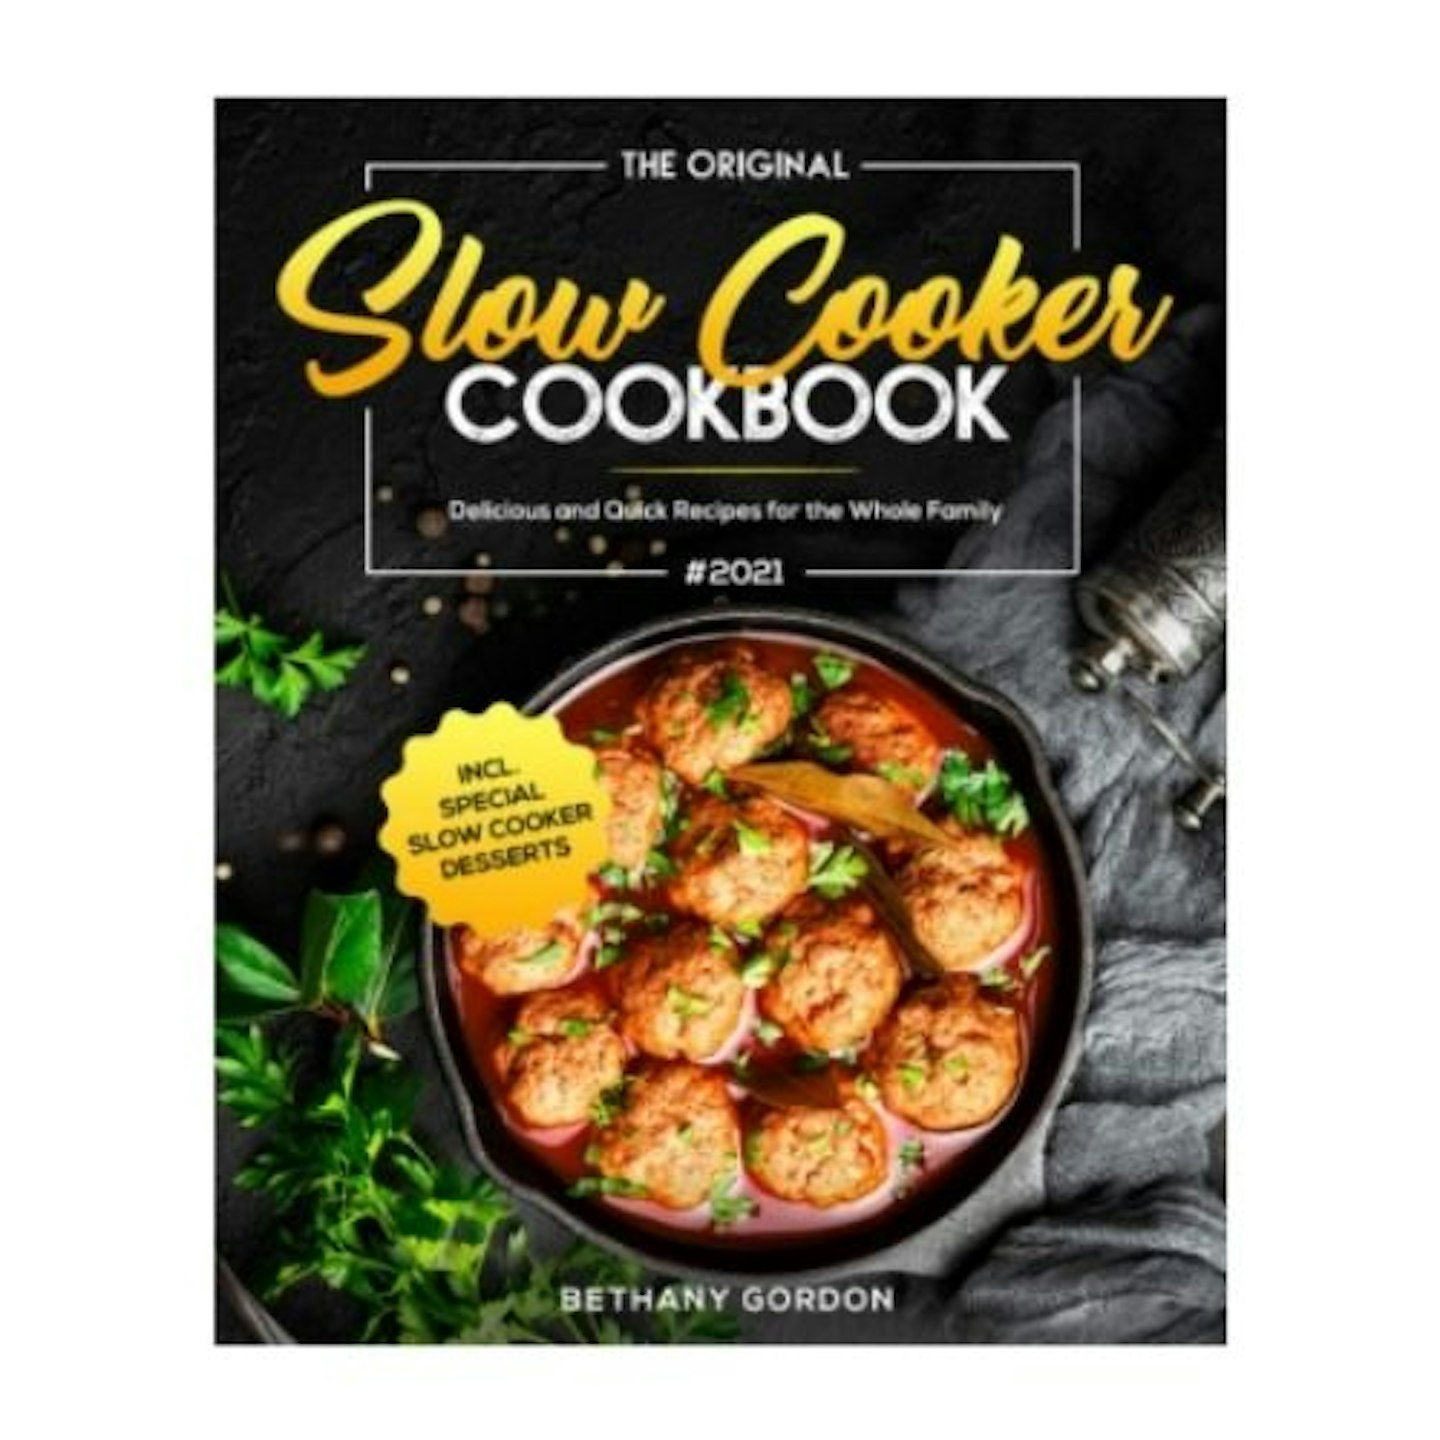 The Original Slow Cooker Cookbook